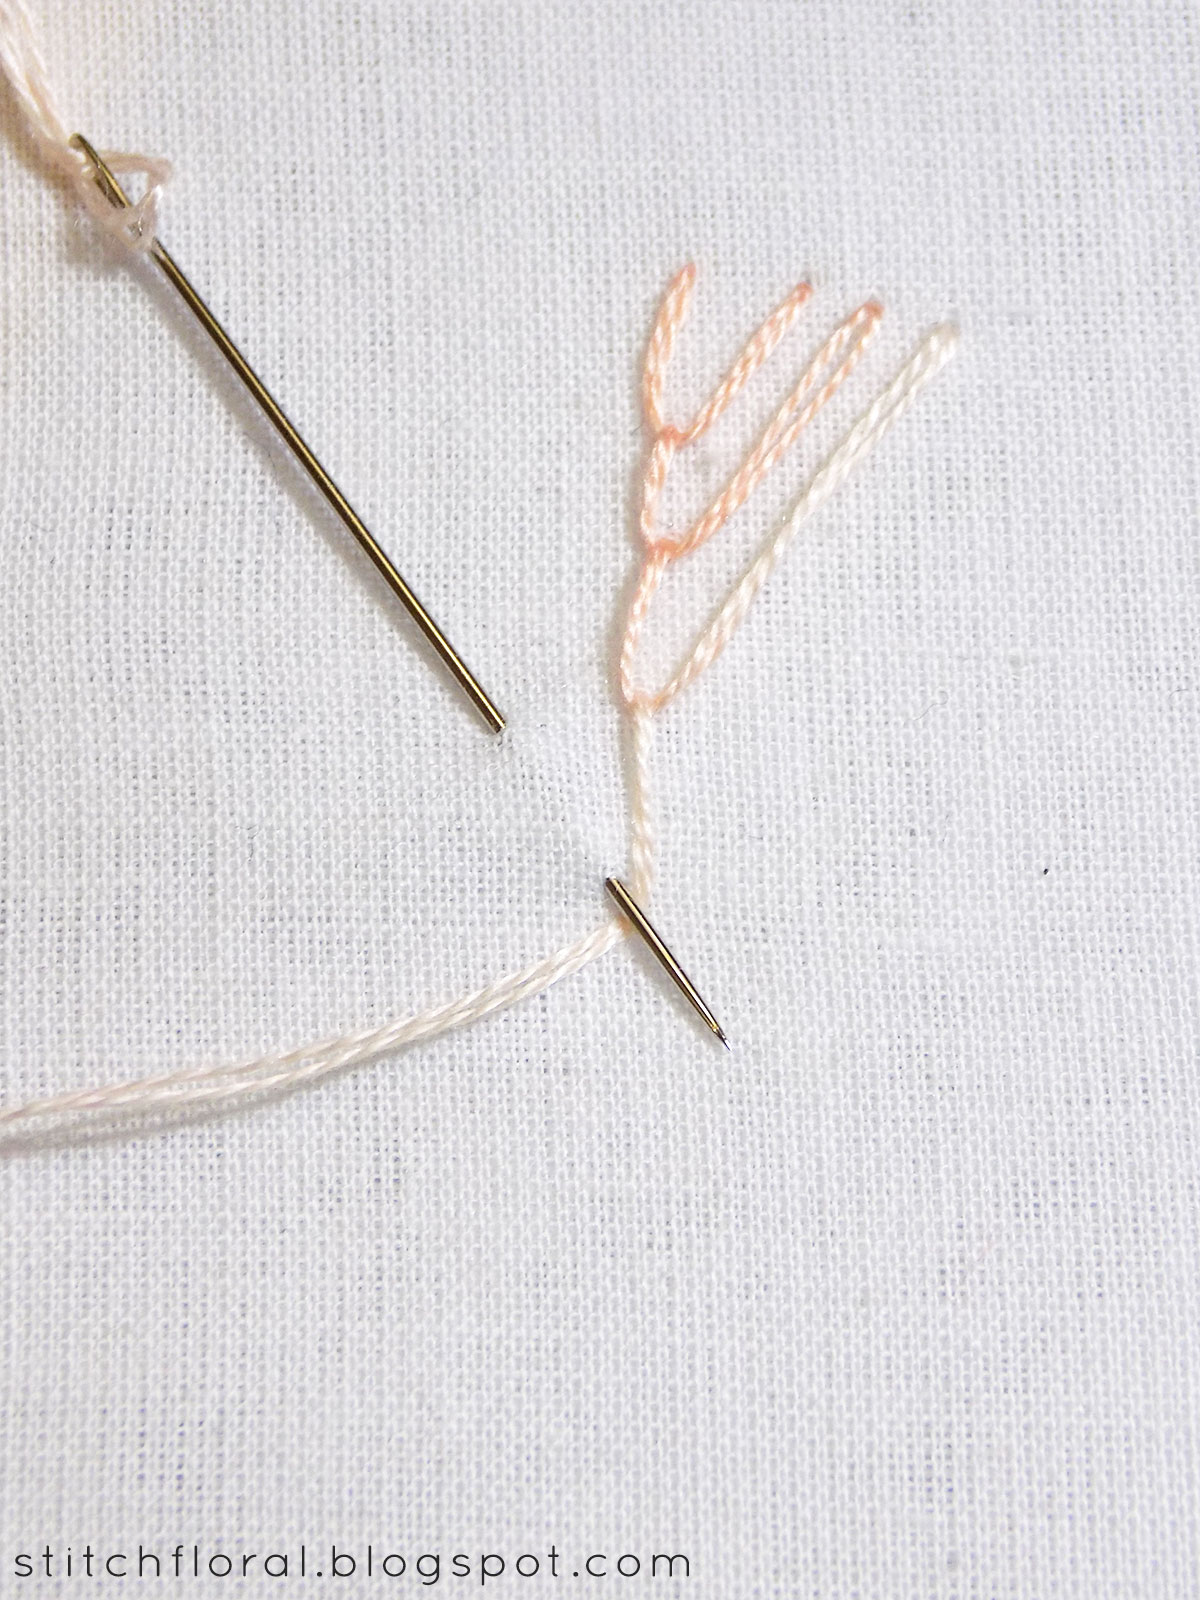 Feather stitch variations - Stitch Floral